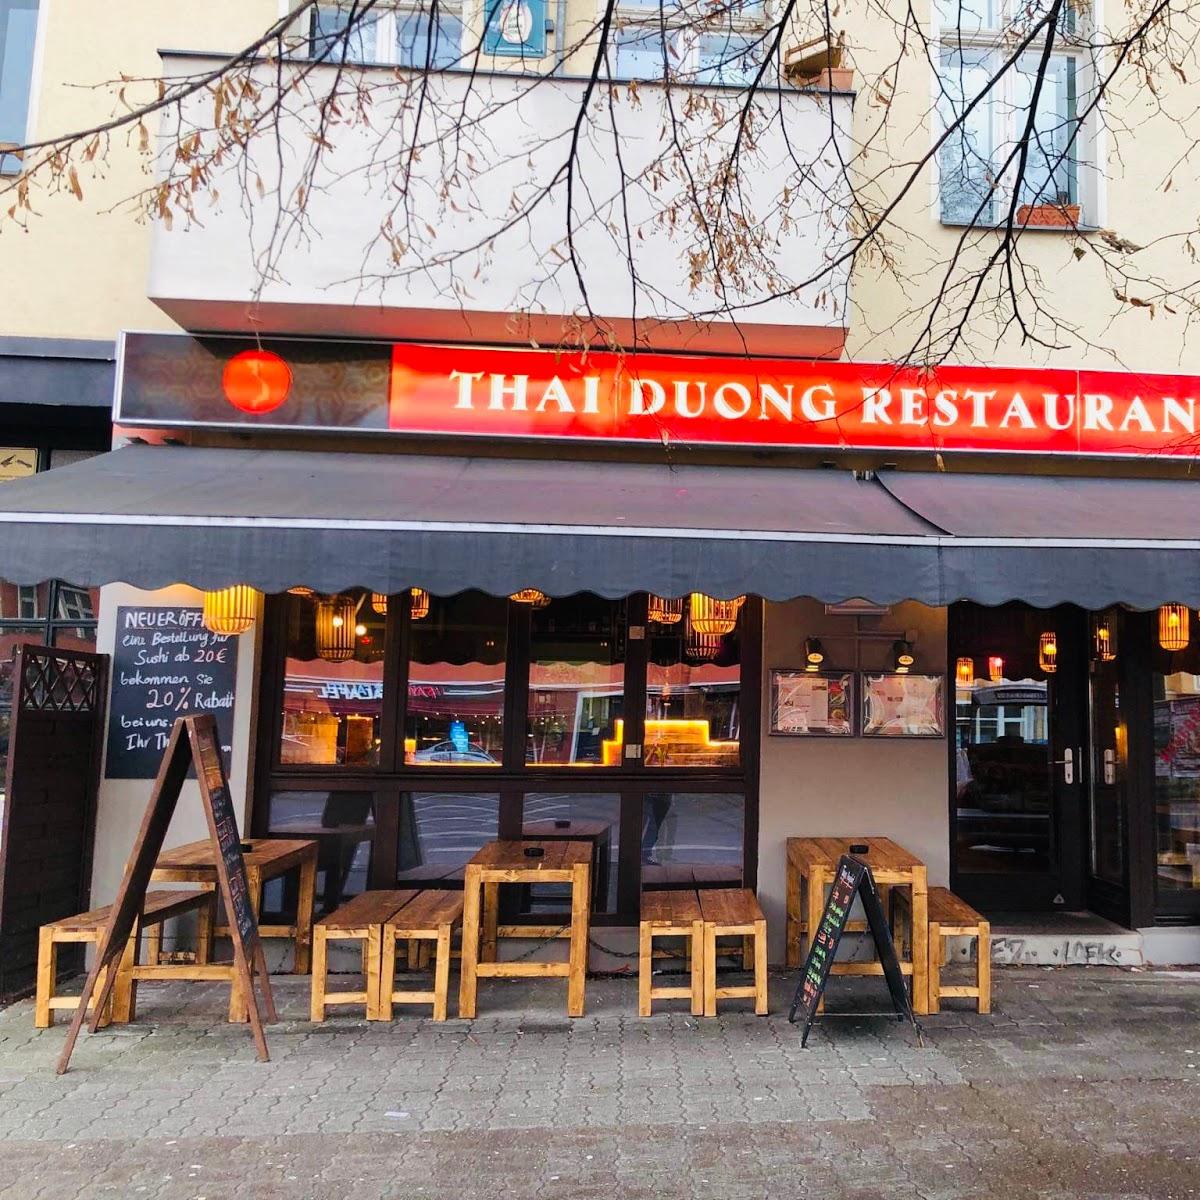 Restaurant "Thai Duong Restaurant" in Berlin